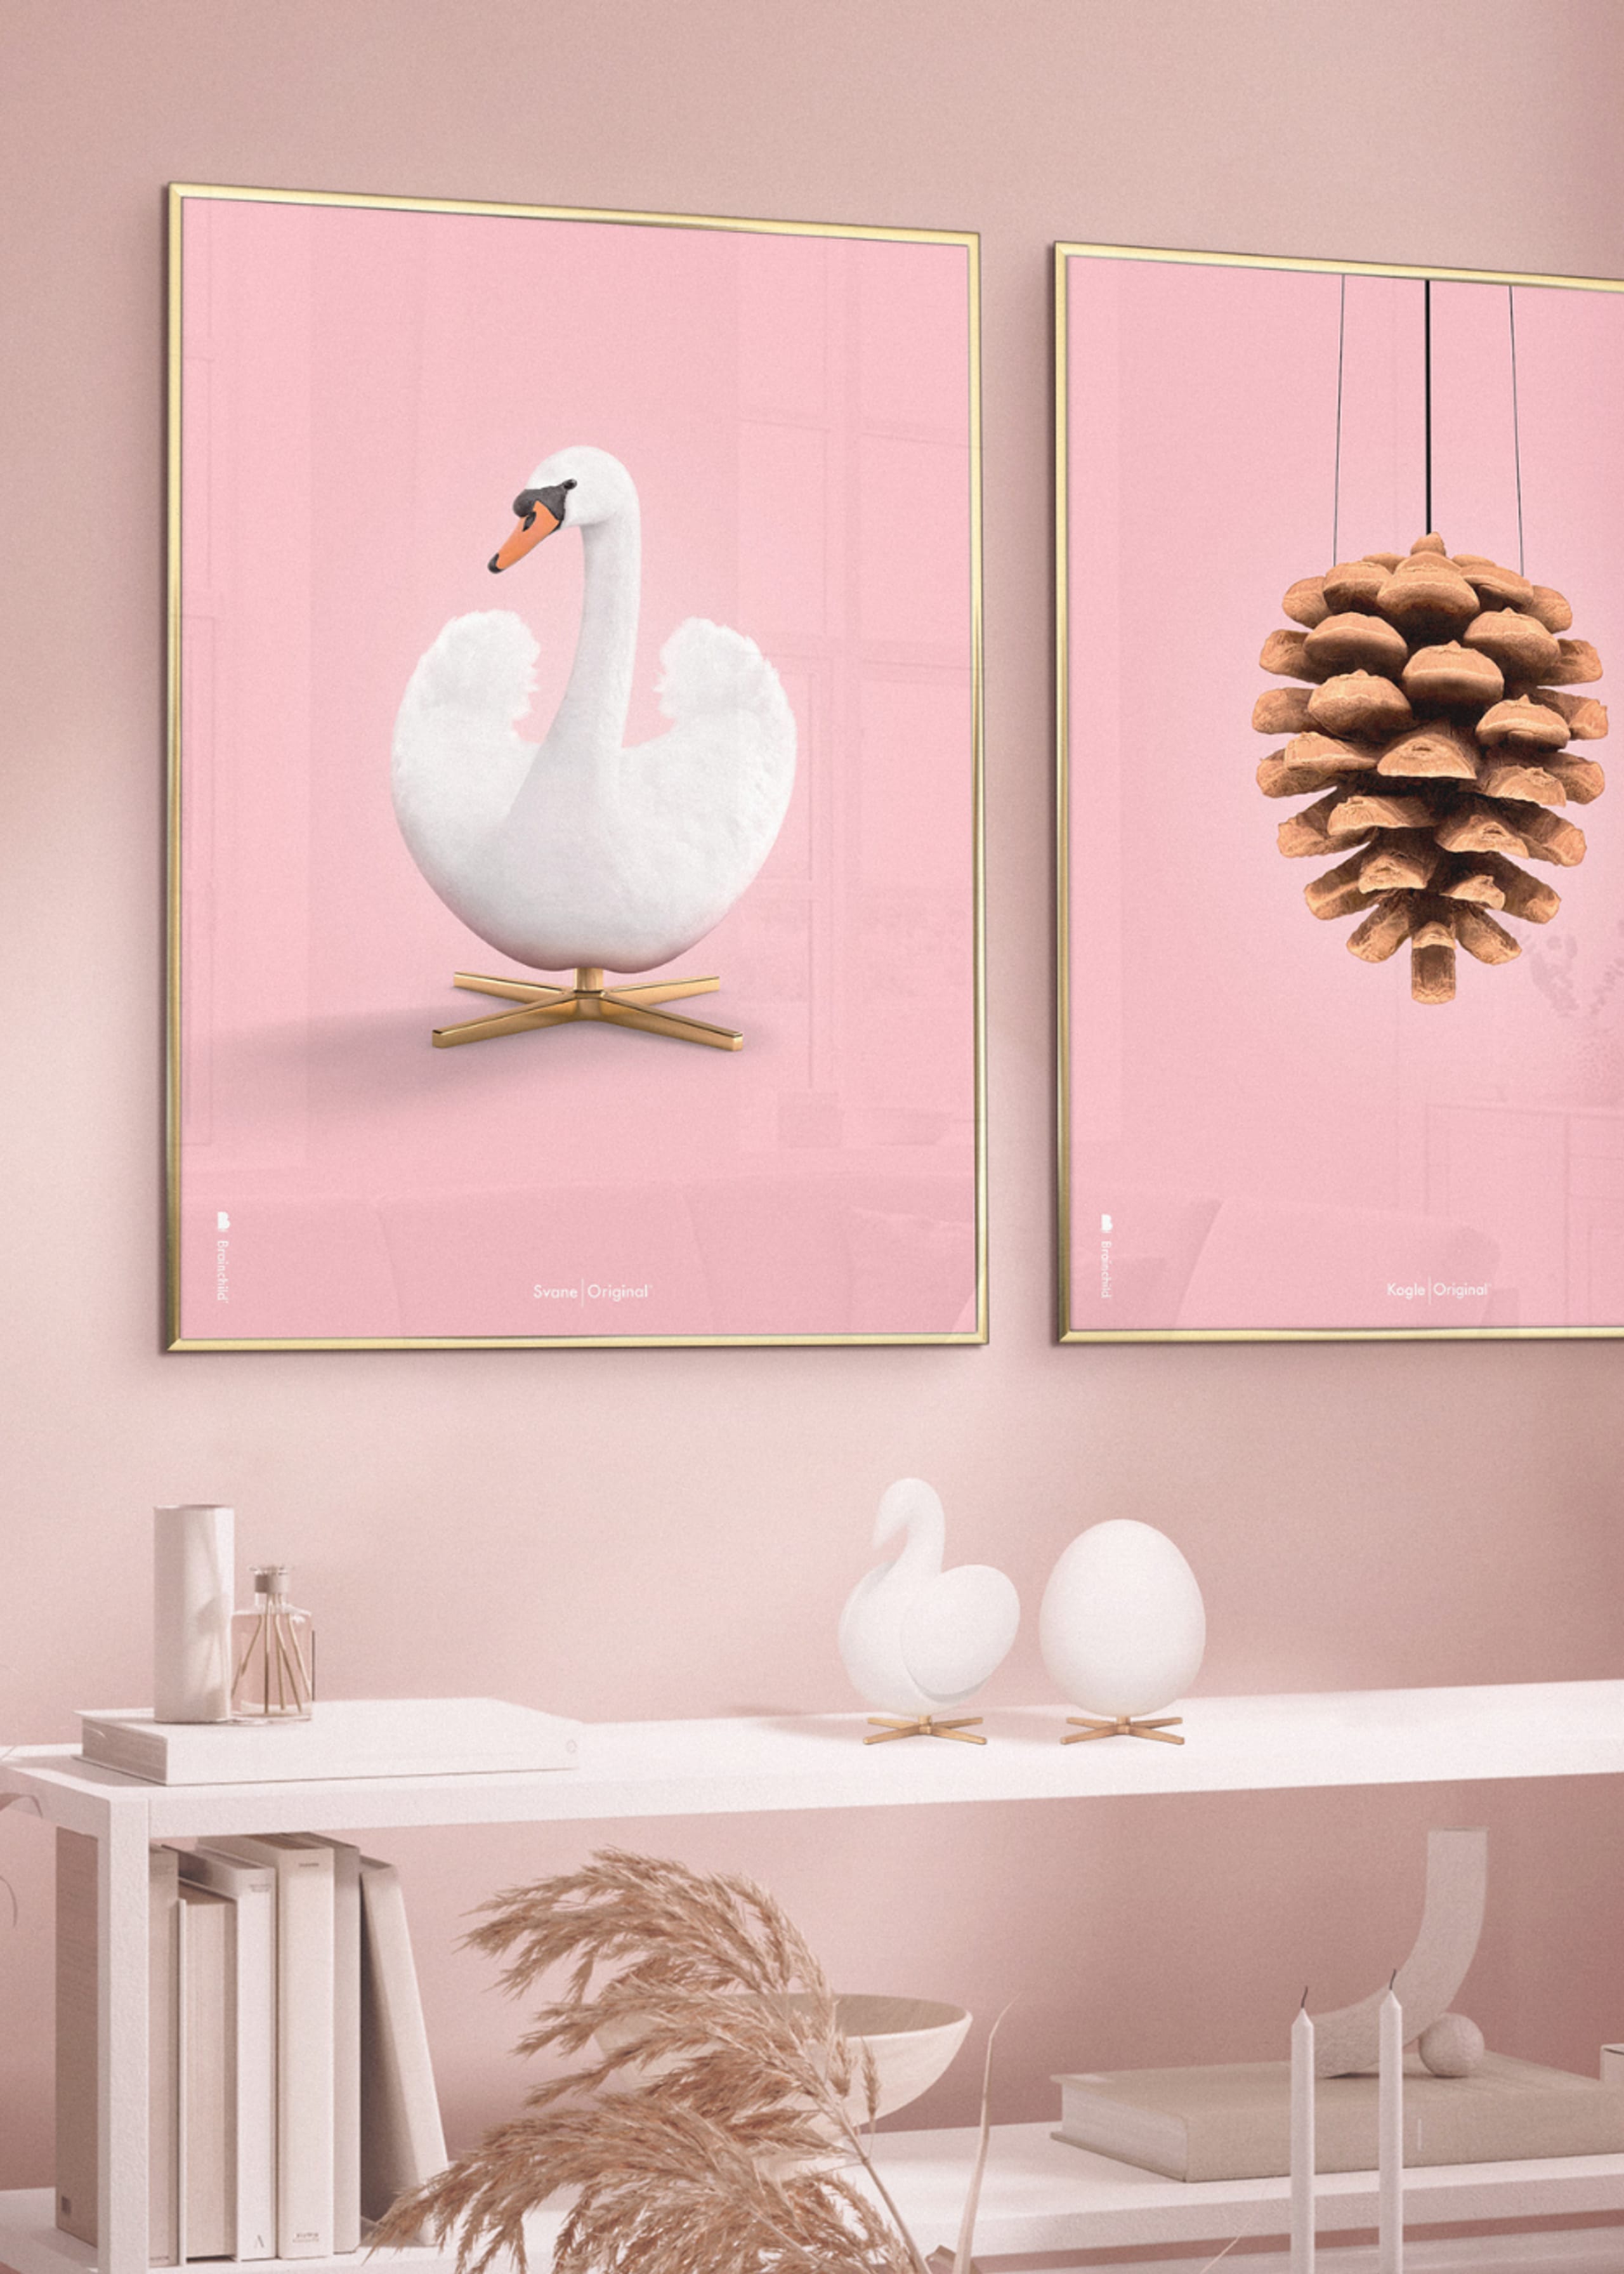 Brainchild - Poster - Classic Swan Poster - Rose - No frame